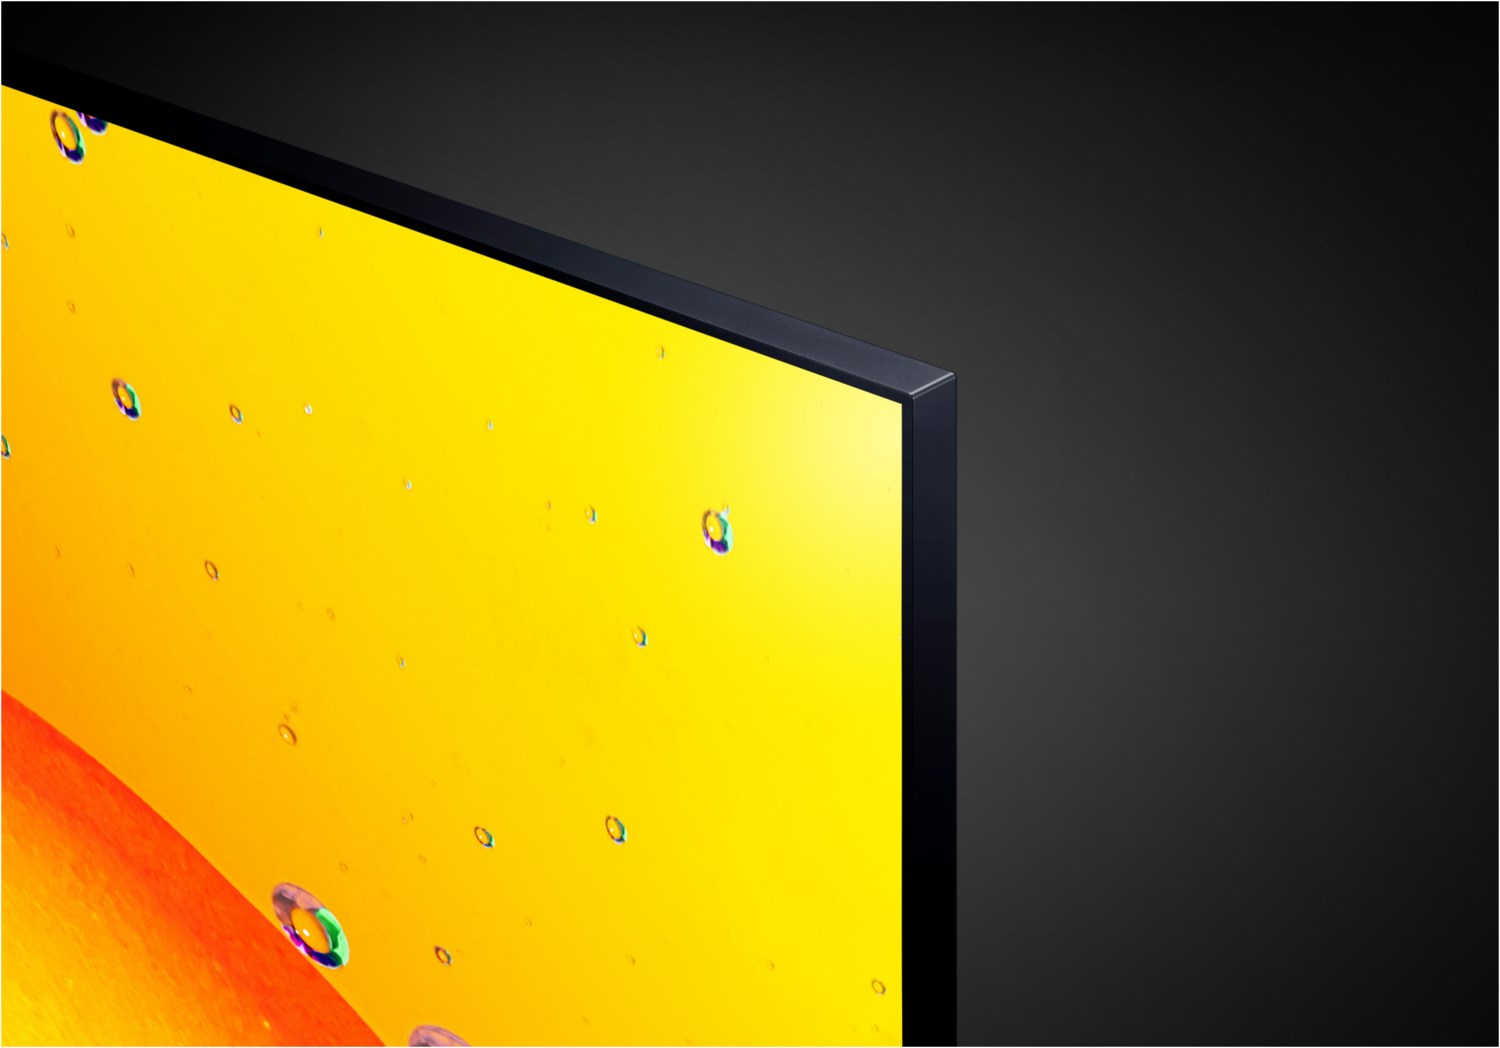 LG 65 Zoll (164 cm) 4K UHD NanoCell Smart TV schwarz